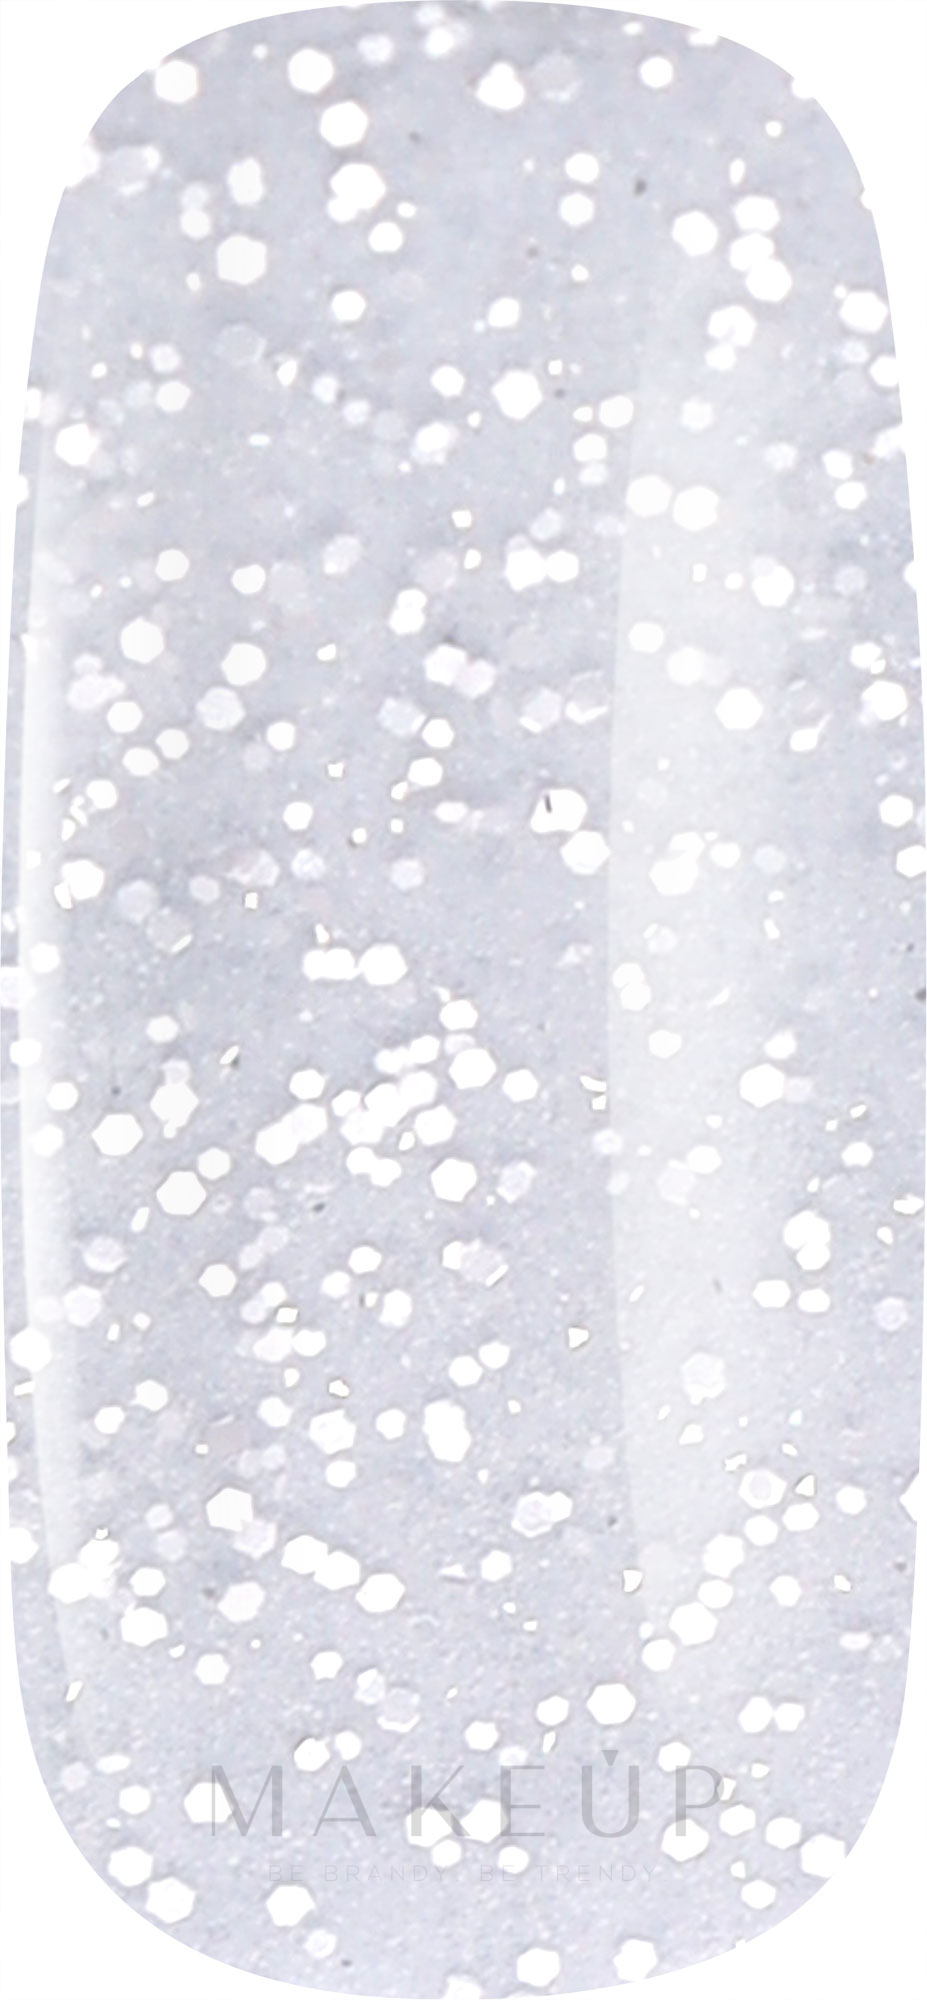 Nagelüberlack mit feinen Krümeln - Tufi Profi Premium Dot Silver Top — Bild 8 ml